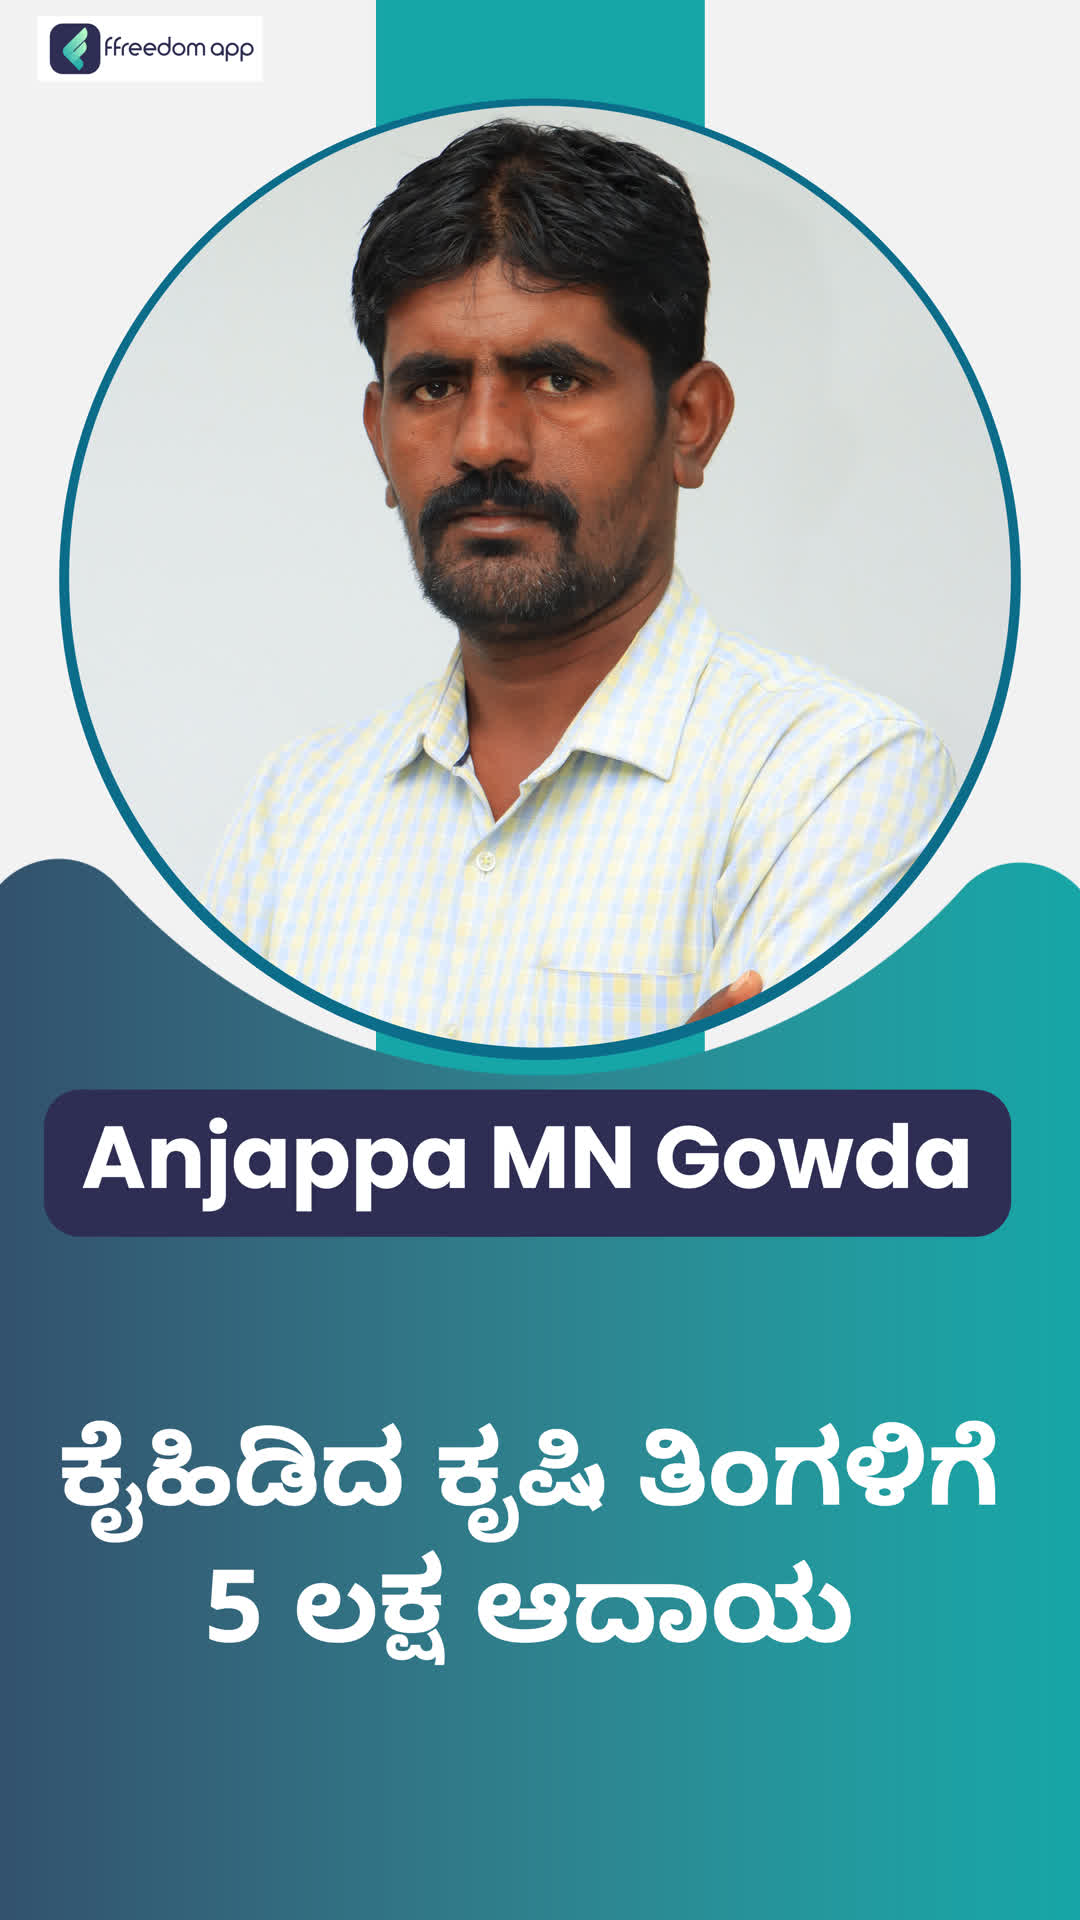 ANJAPPA MN GOWDA's Honest Review of ffreedom app - Kolar ,Karnataka